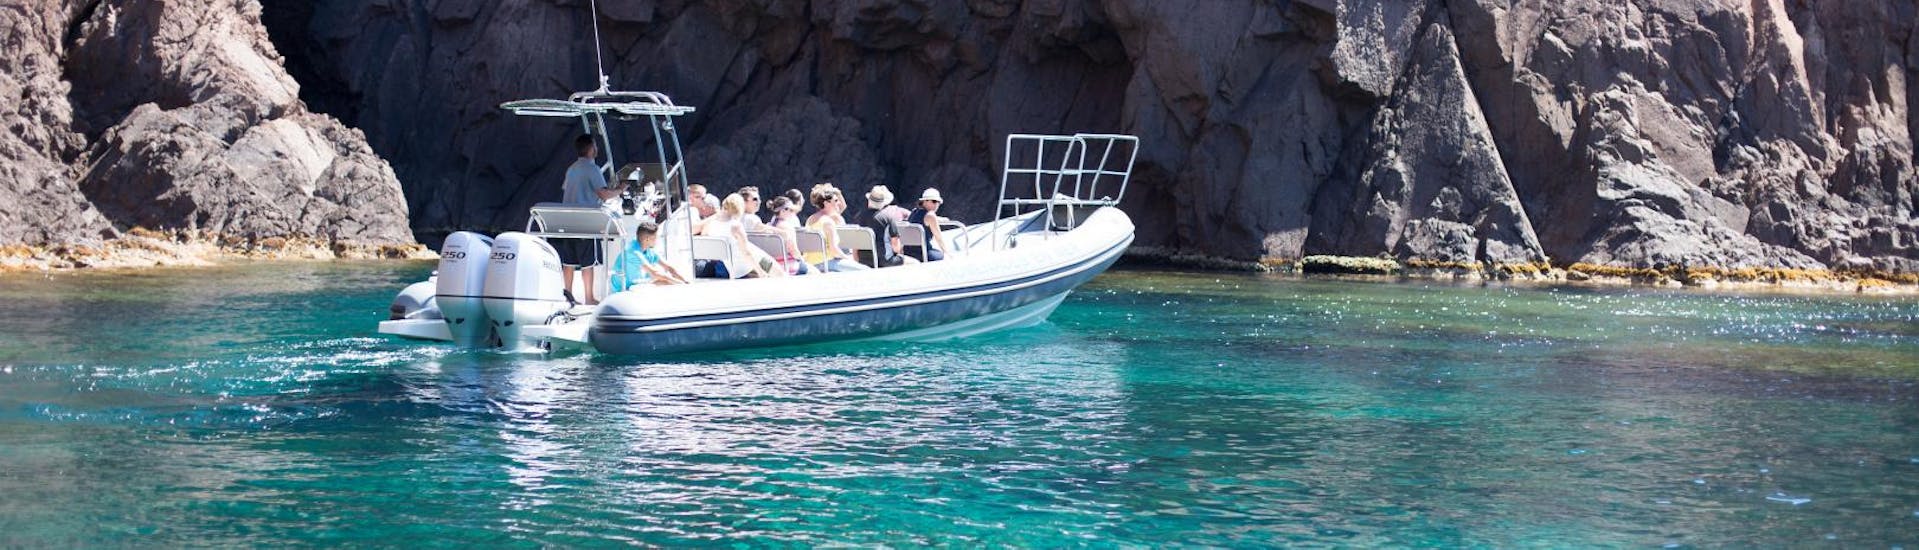 Un grupo disfruta del paseo en barco en Golfe de Porto - Calanques de Piana, operado por Avventu Event's.